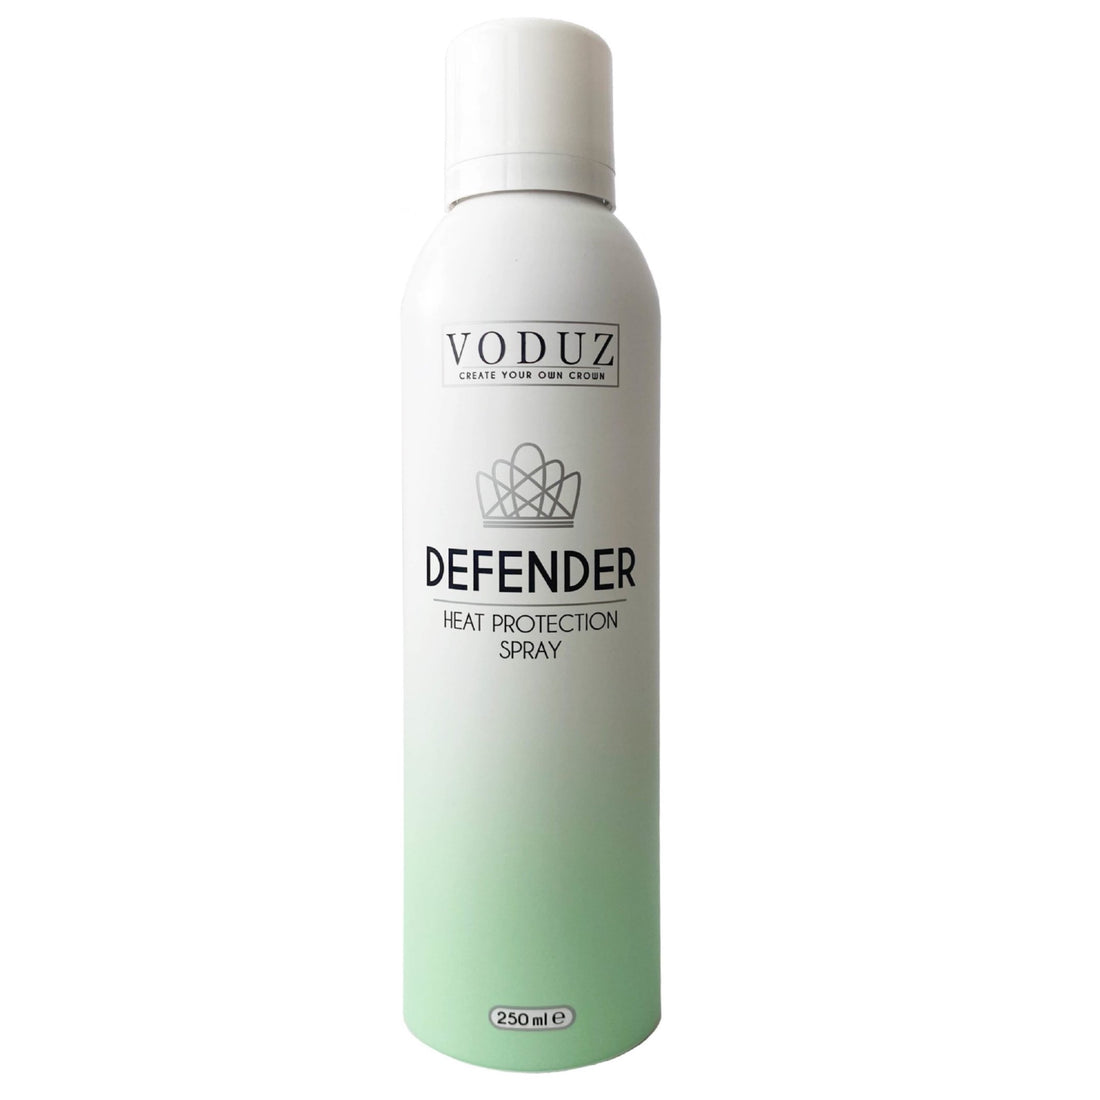 VODUZ Defender Heat Protection Spray